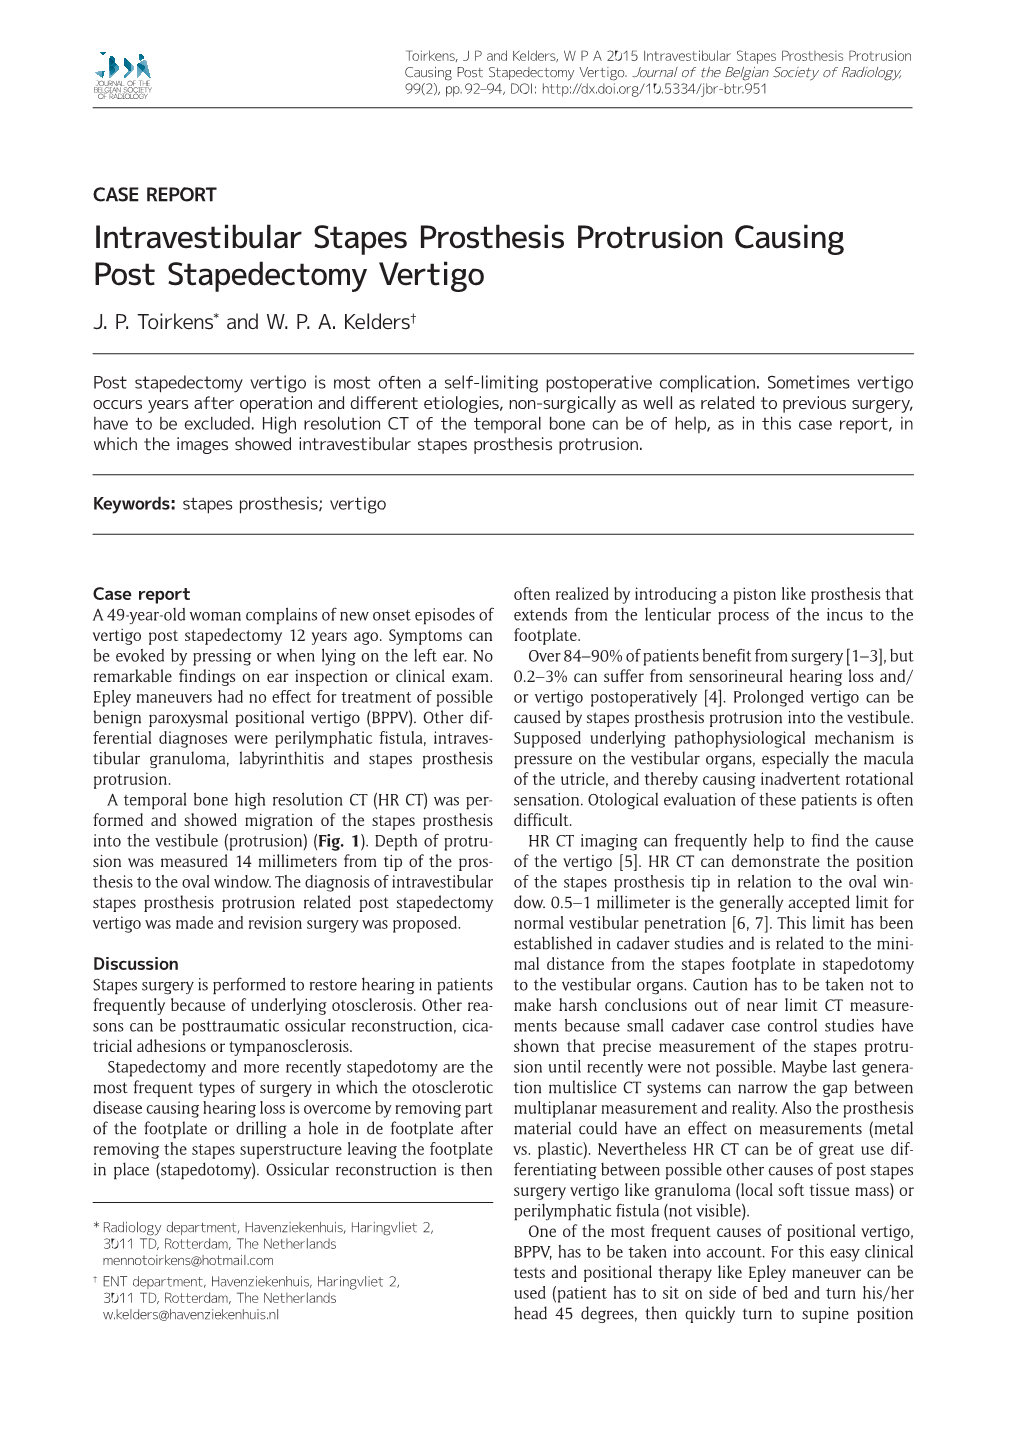 Intravestibular Stapes Prosthesis Protrusion Causing Post Stapedectomy Vertigo